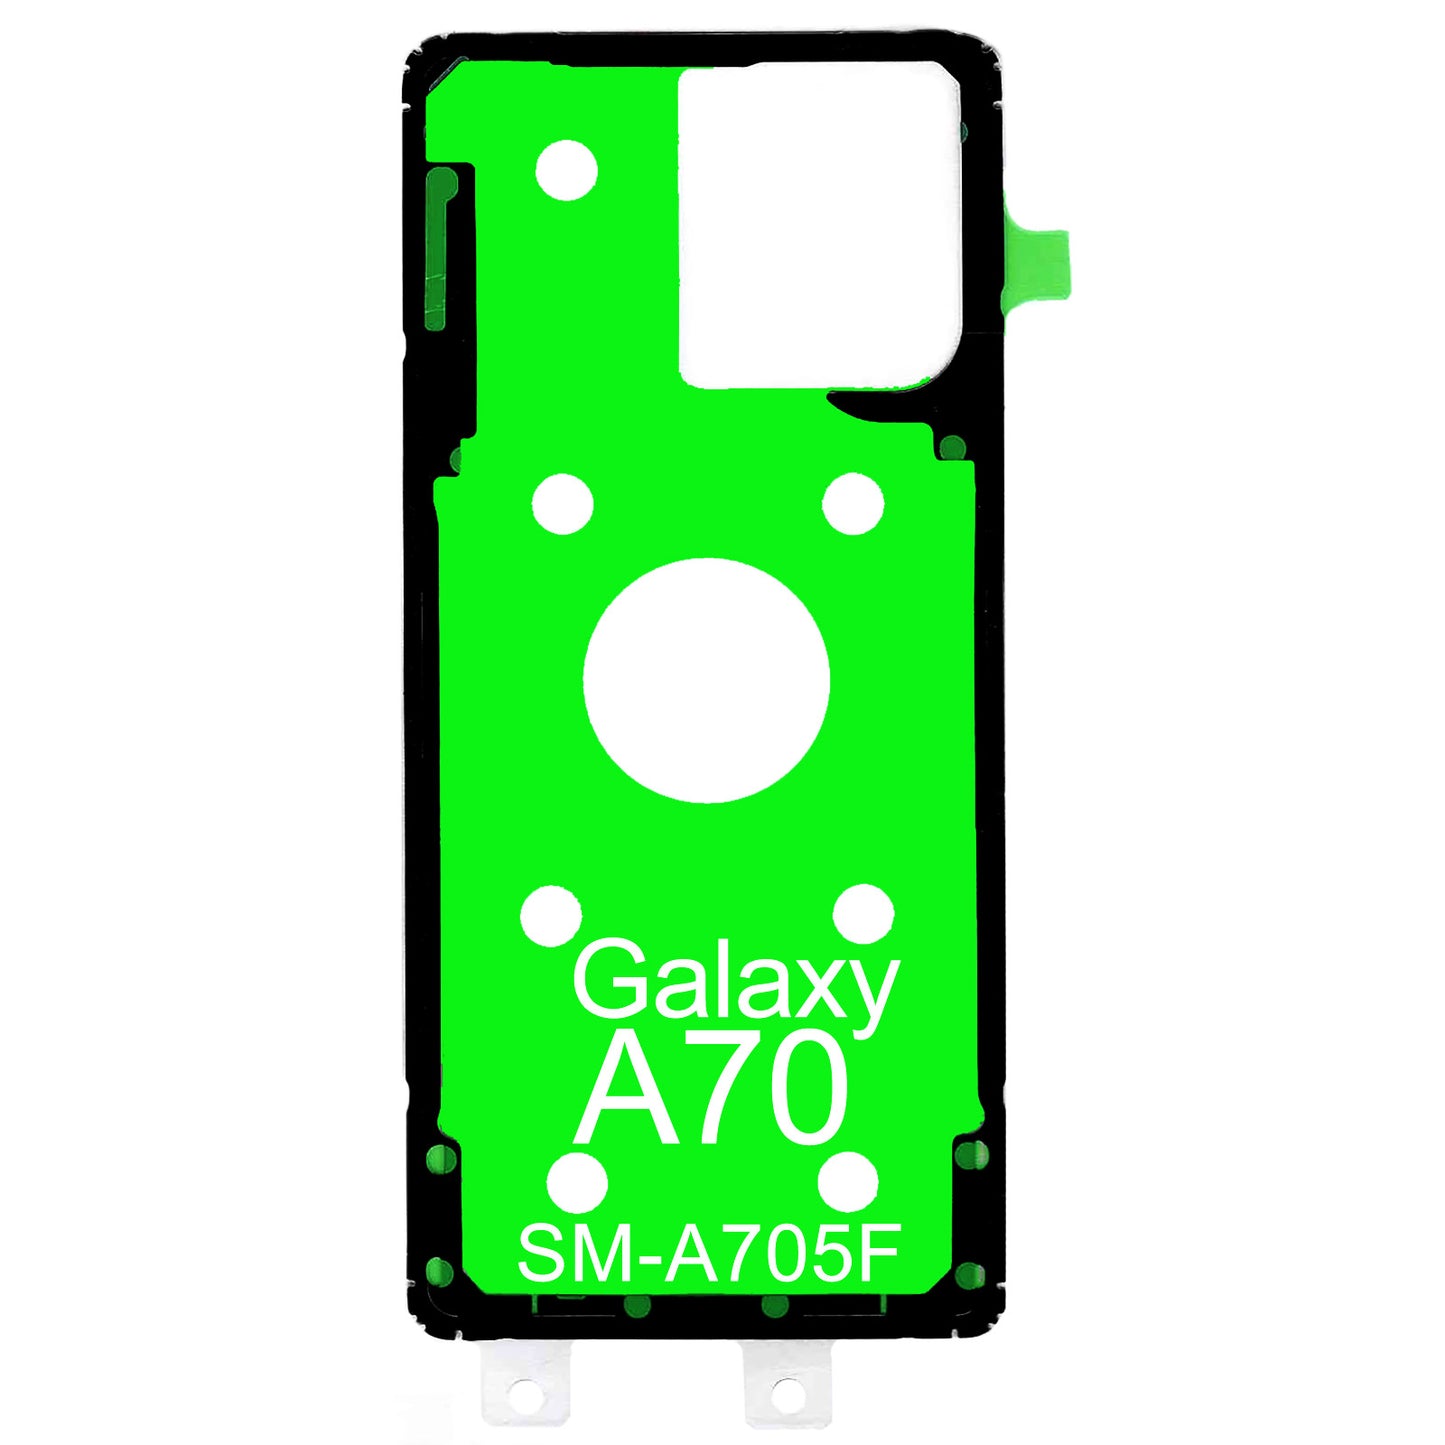 Samsung Galaxy A70 SM-A705F BA705 Rahmen Kleber Klebepad Adhesive Wasser Dichtung Kleberahmen Rahmenkleber